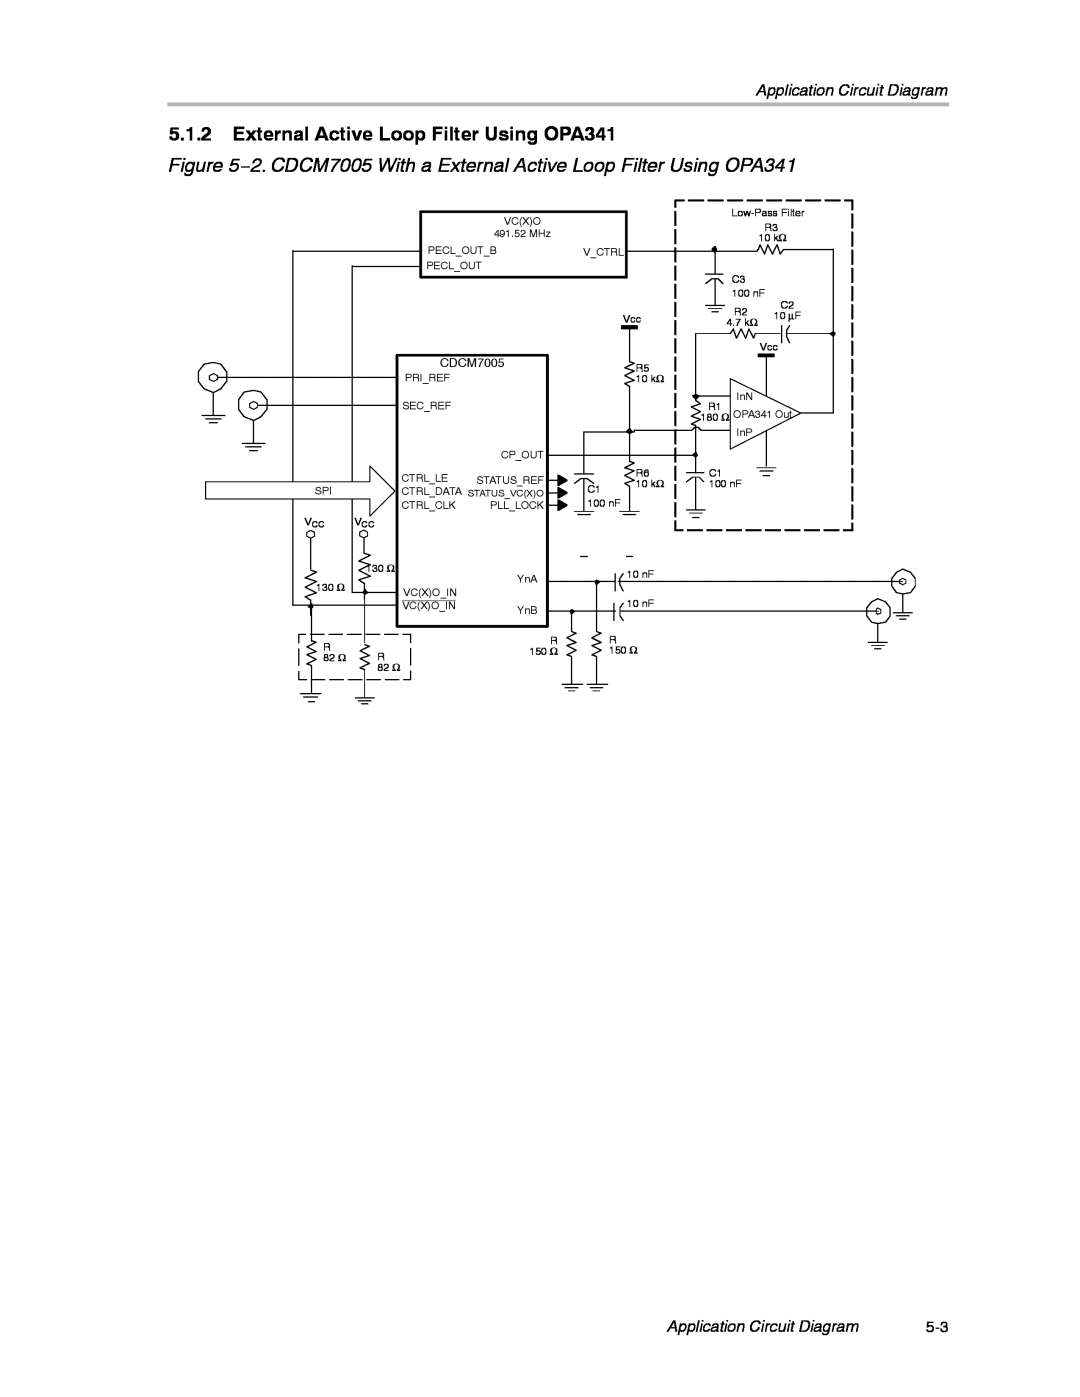 Texas Instruments CDCM7005 manual External Active Loop Filter Using OPA341, Application Circuit Diagram 